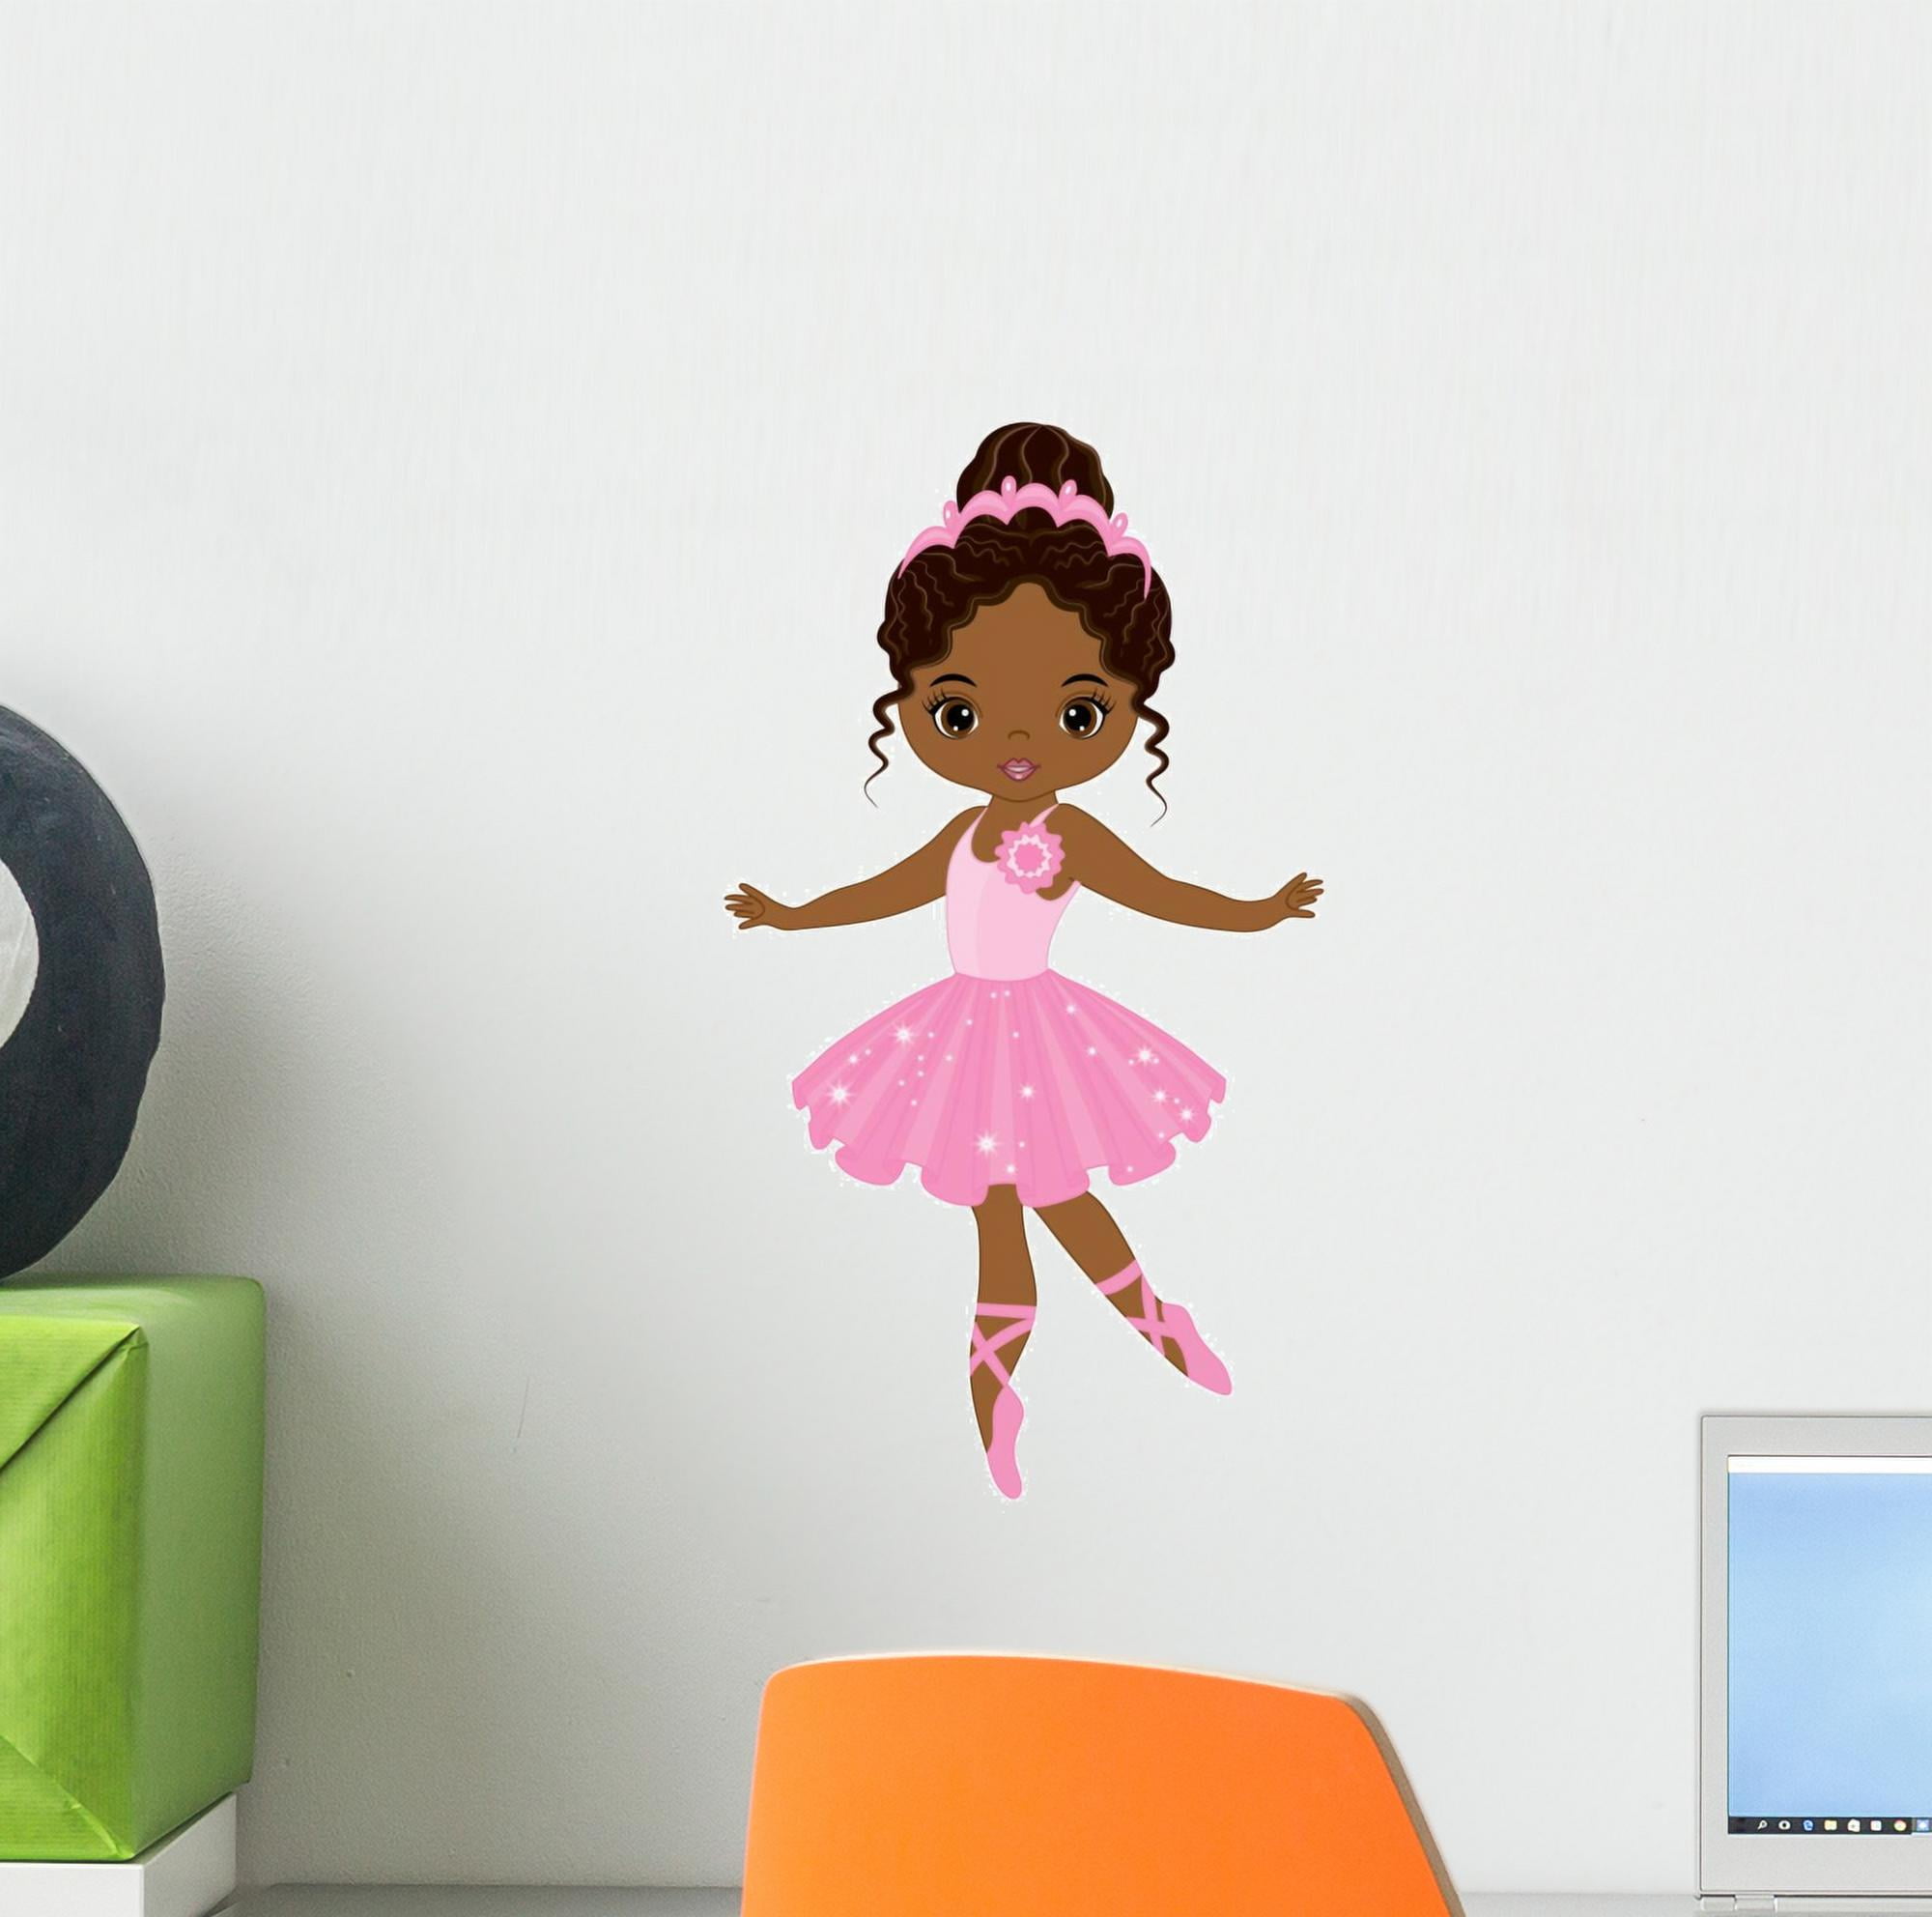 Details about   Wall Sticker Cartoon Girl Ballet Dancer Bedroom Nursery Baby House Decoration 